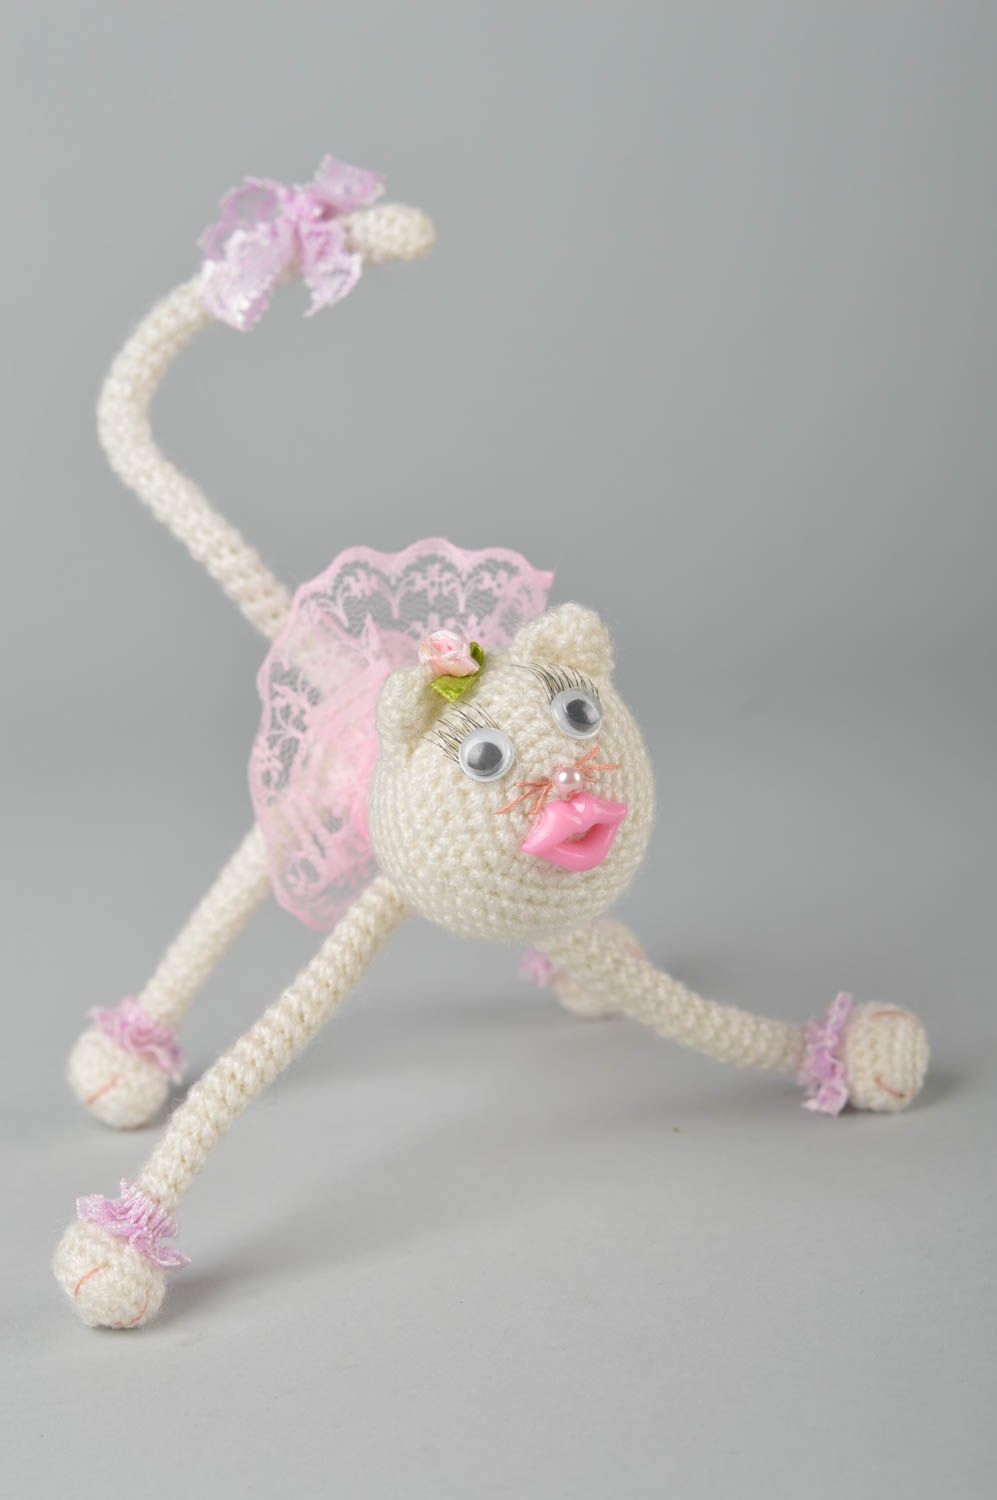 Hand-crocheted creative toy handmade designer toy for babies nursery decor photo 2